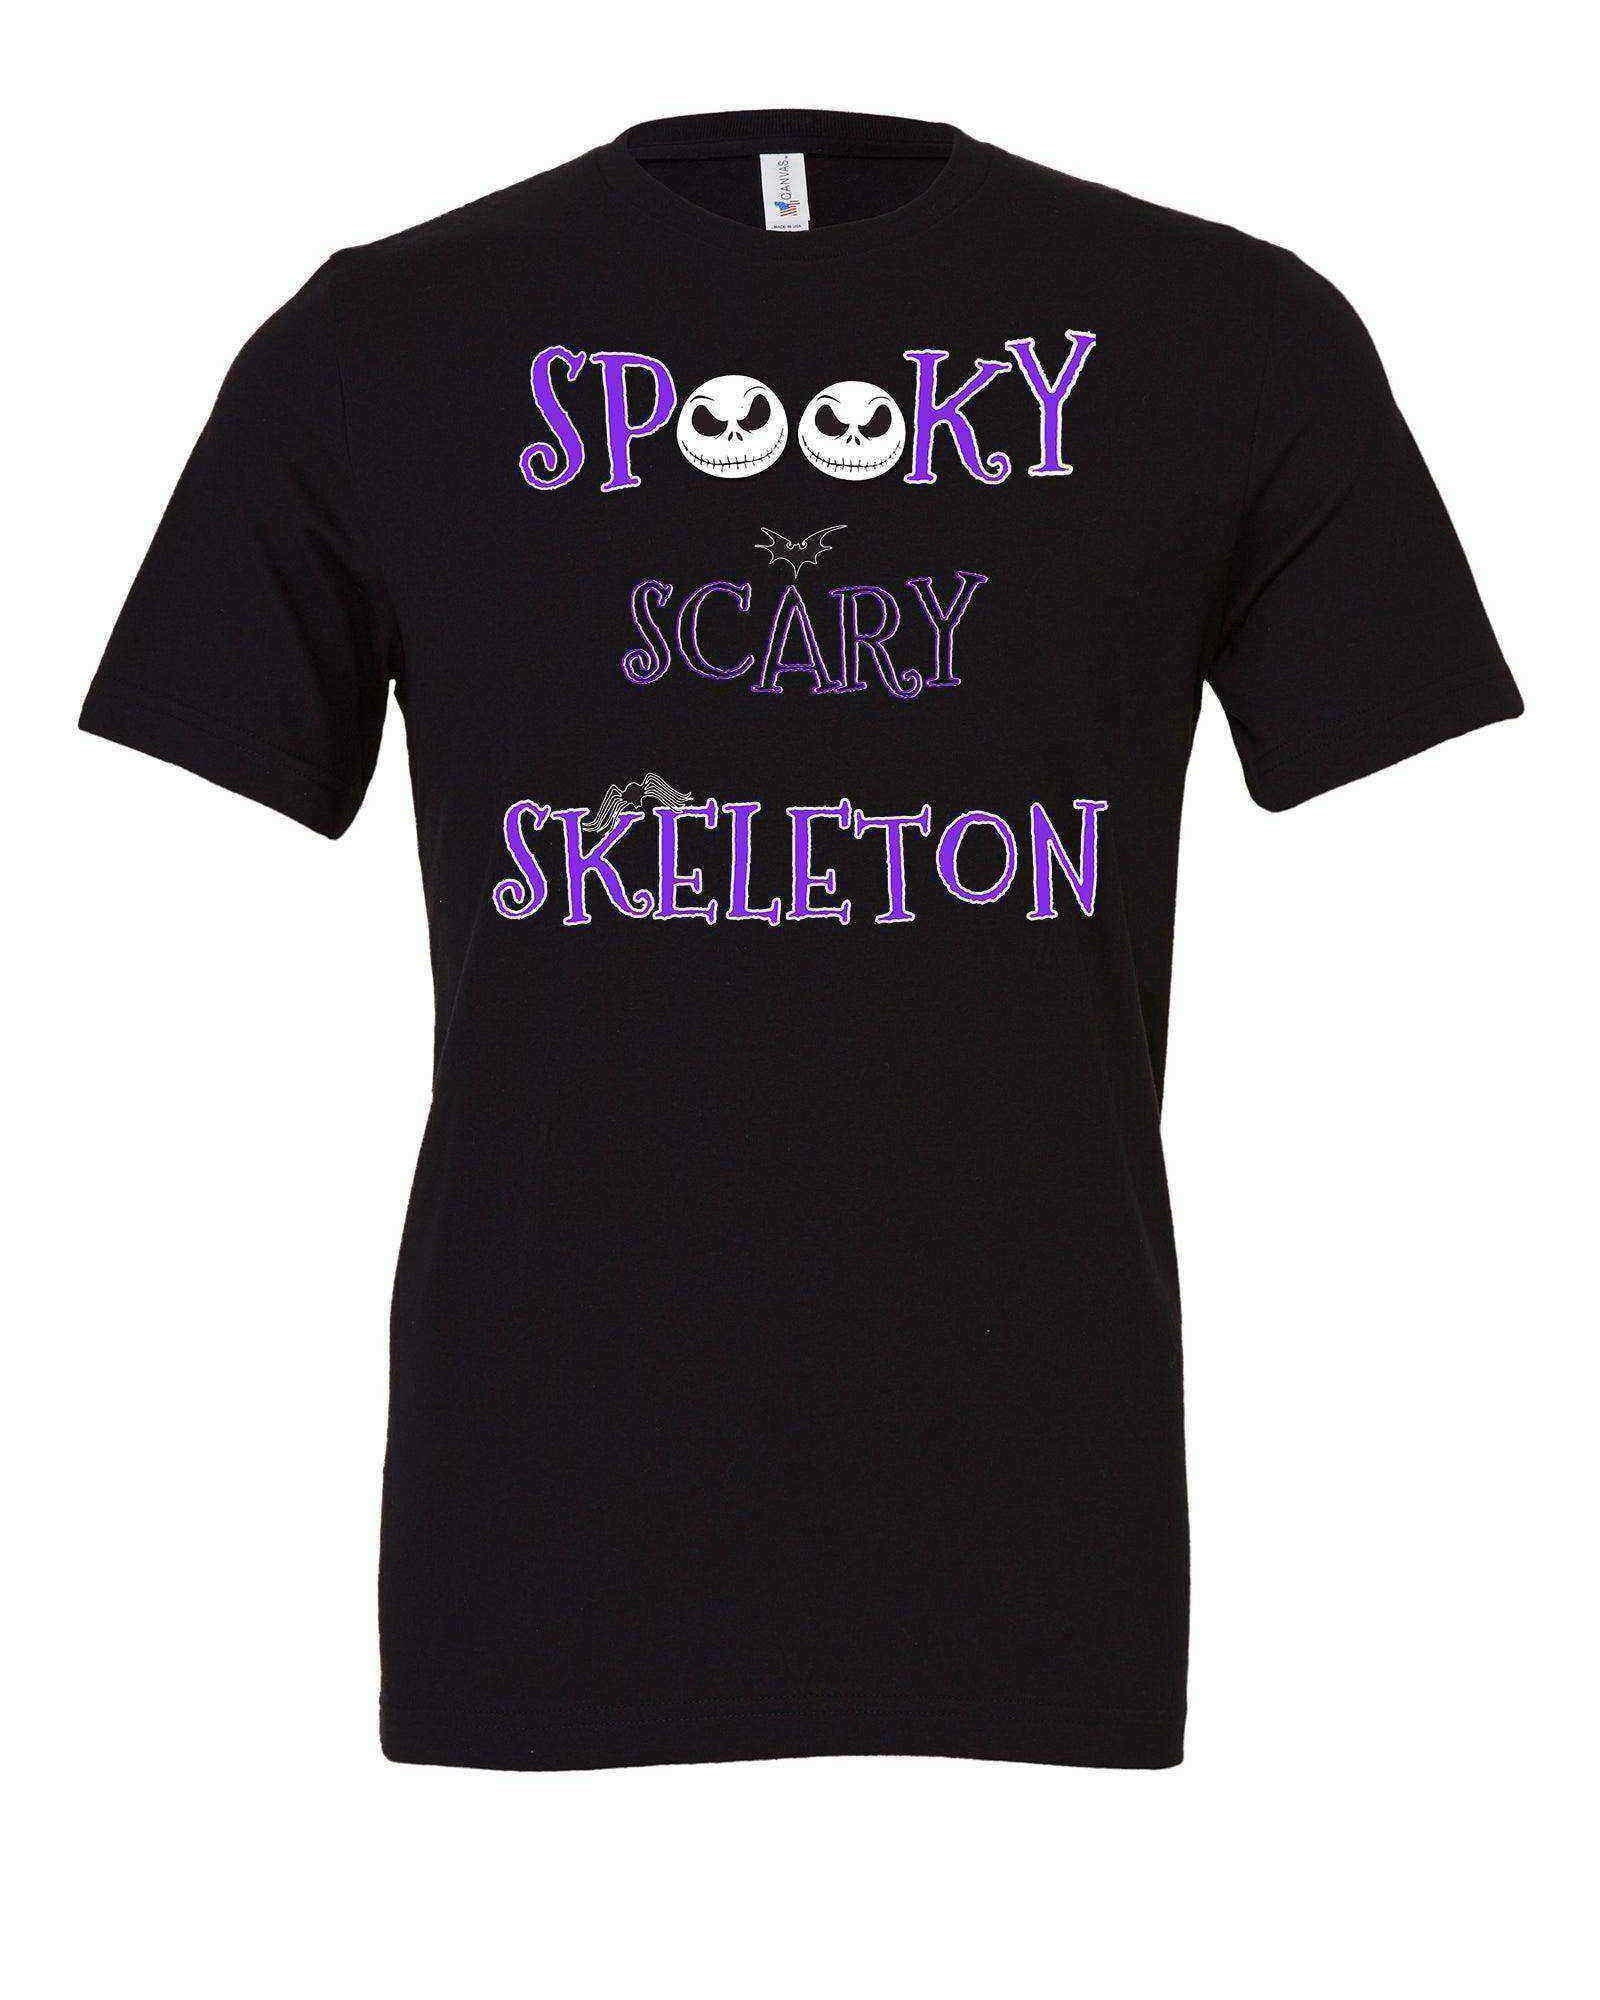 Toddler | Spooky Scary Skeleton Shirt | Jack Skellington | Nightmare Before Christmas - Dylan's Tees